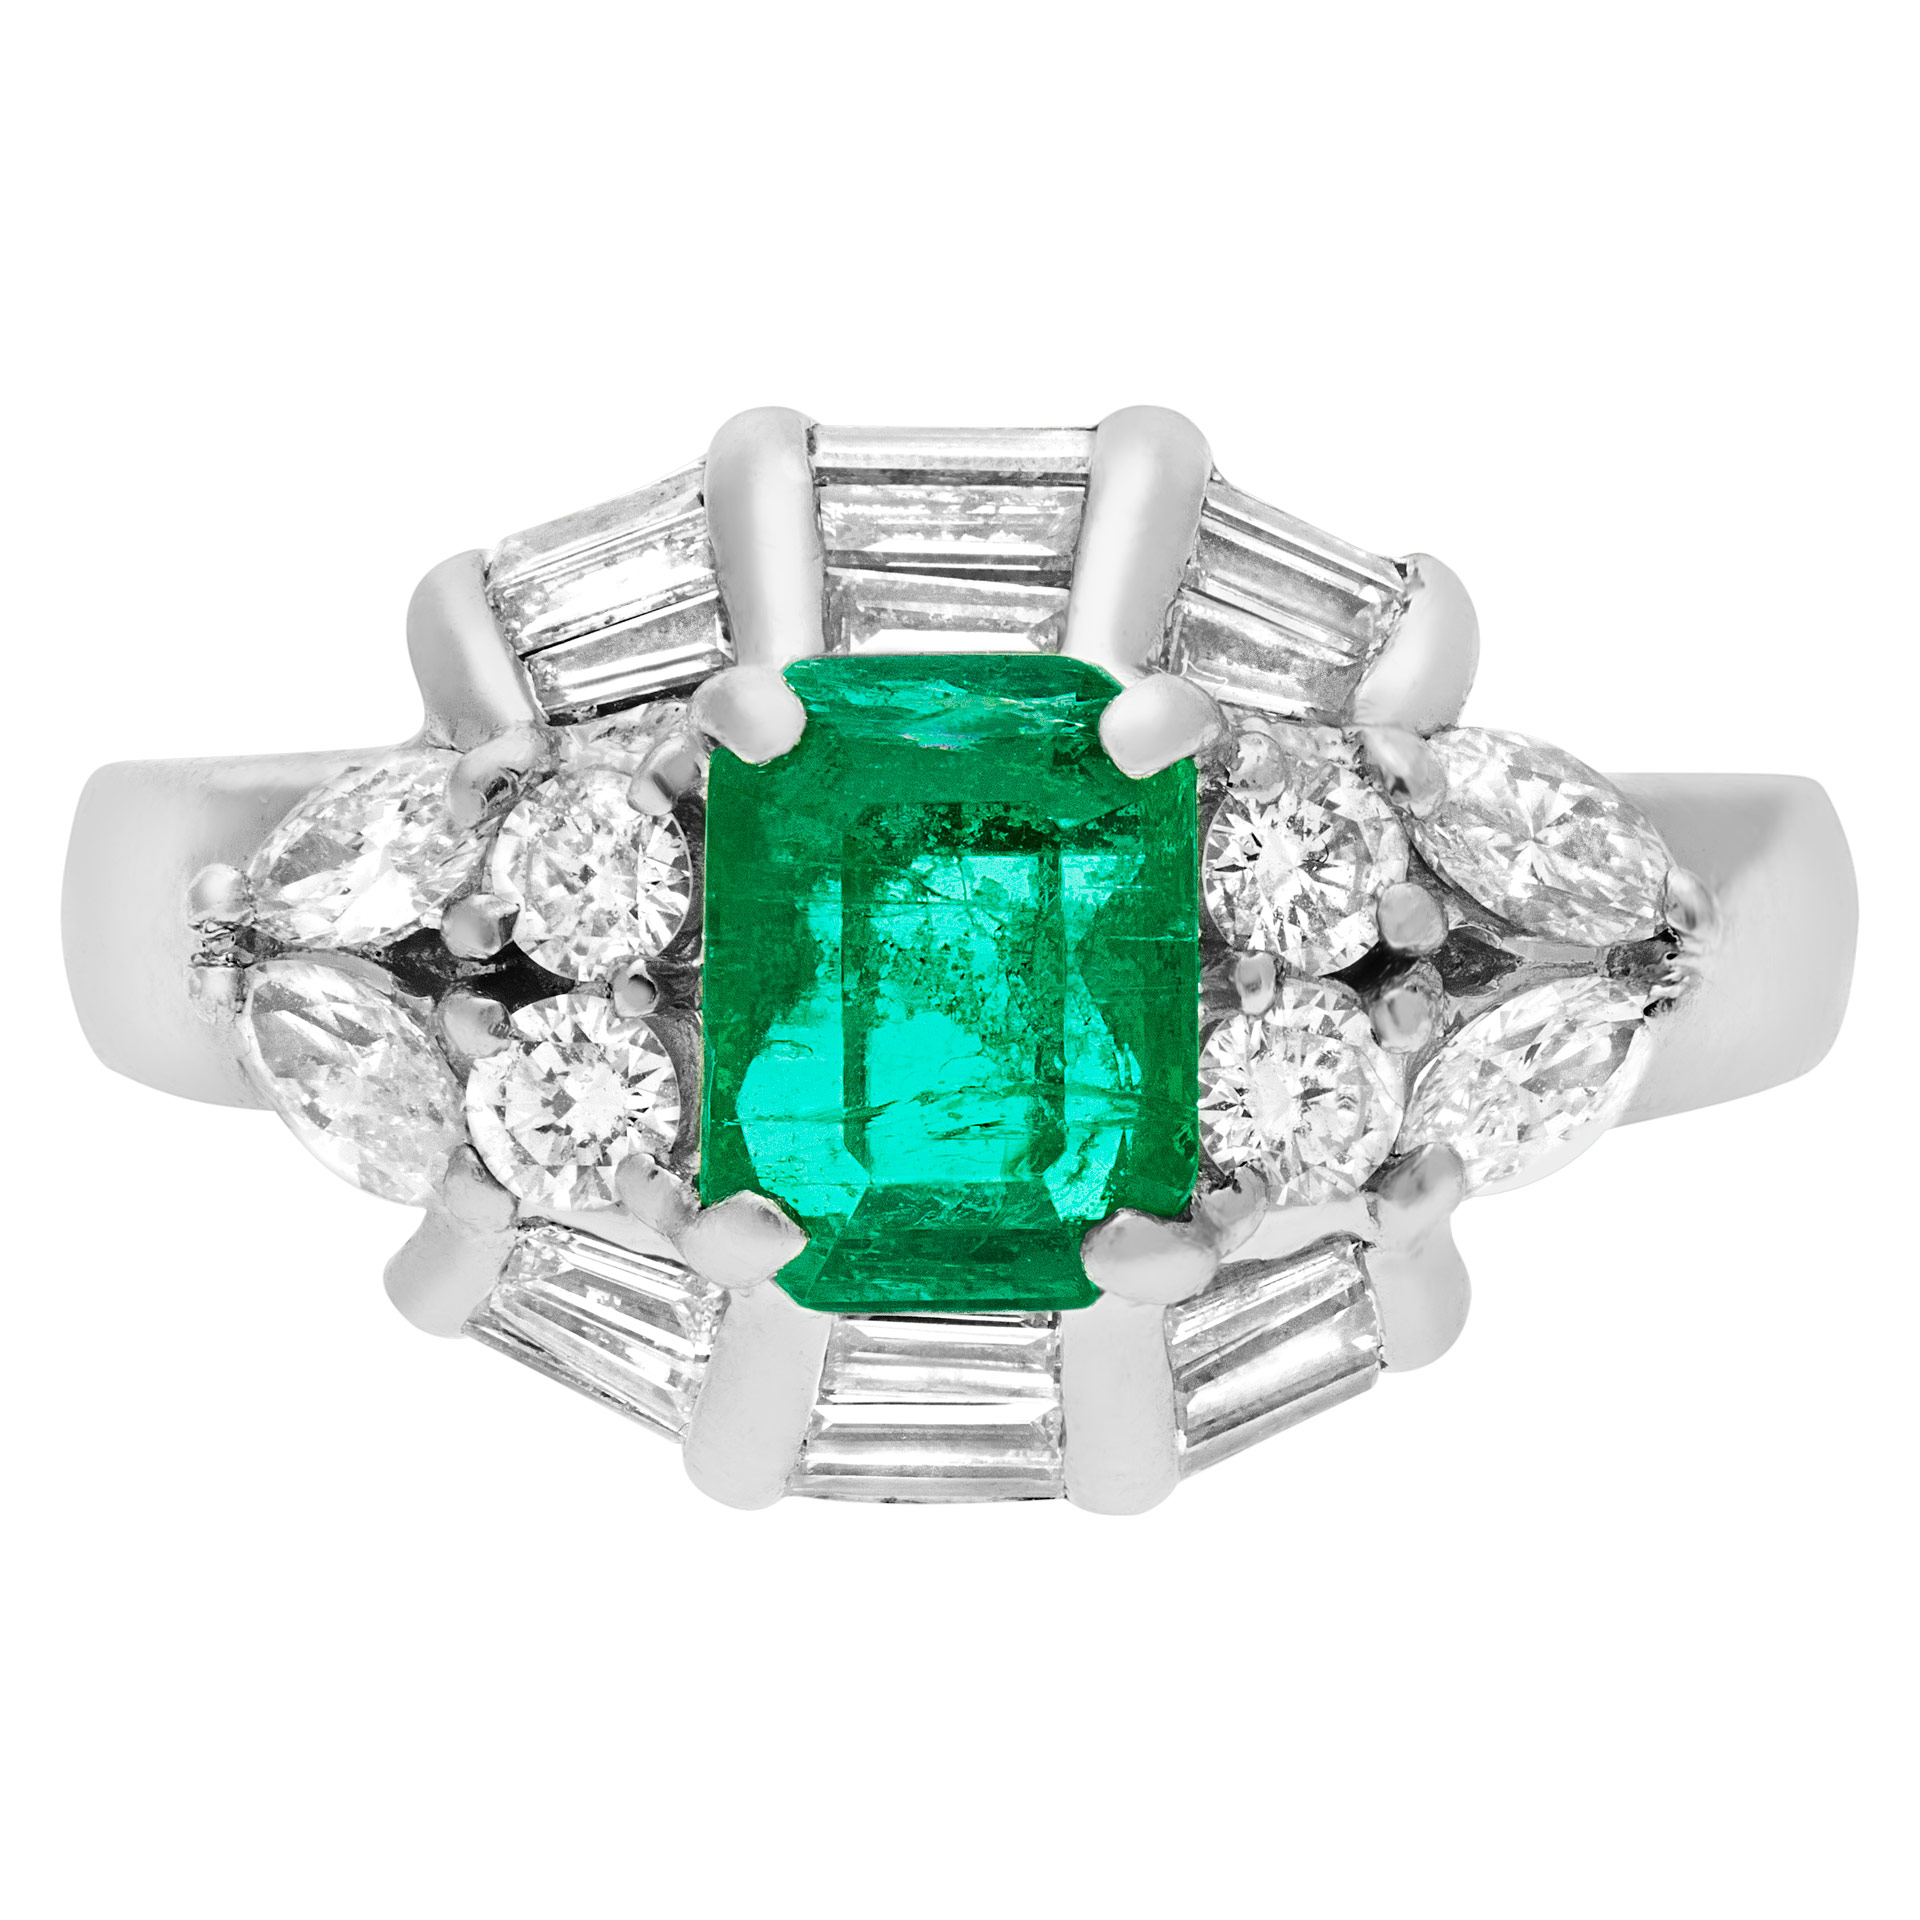 Emerald & diamond ring in platinum. Approx. 1.25 carat emerald. image 1